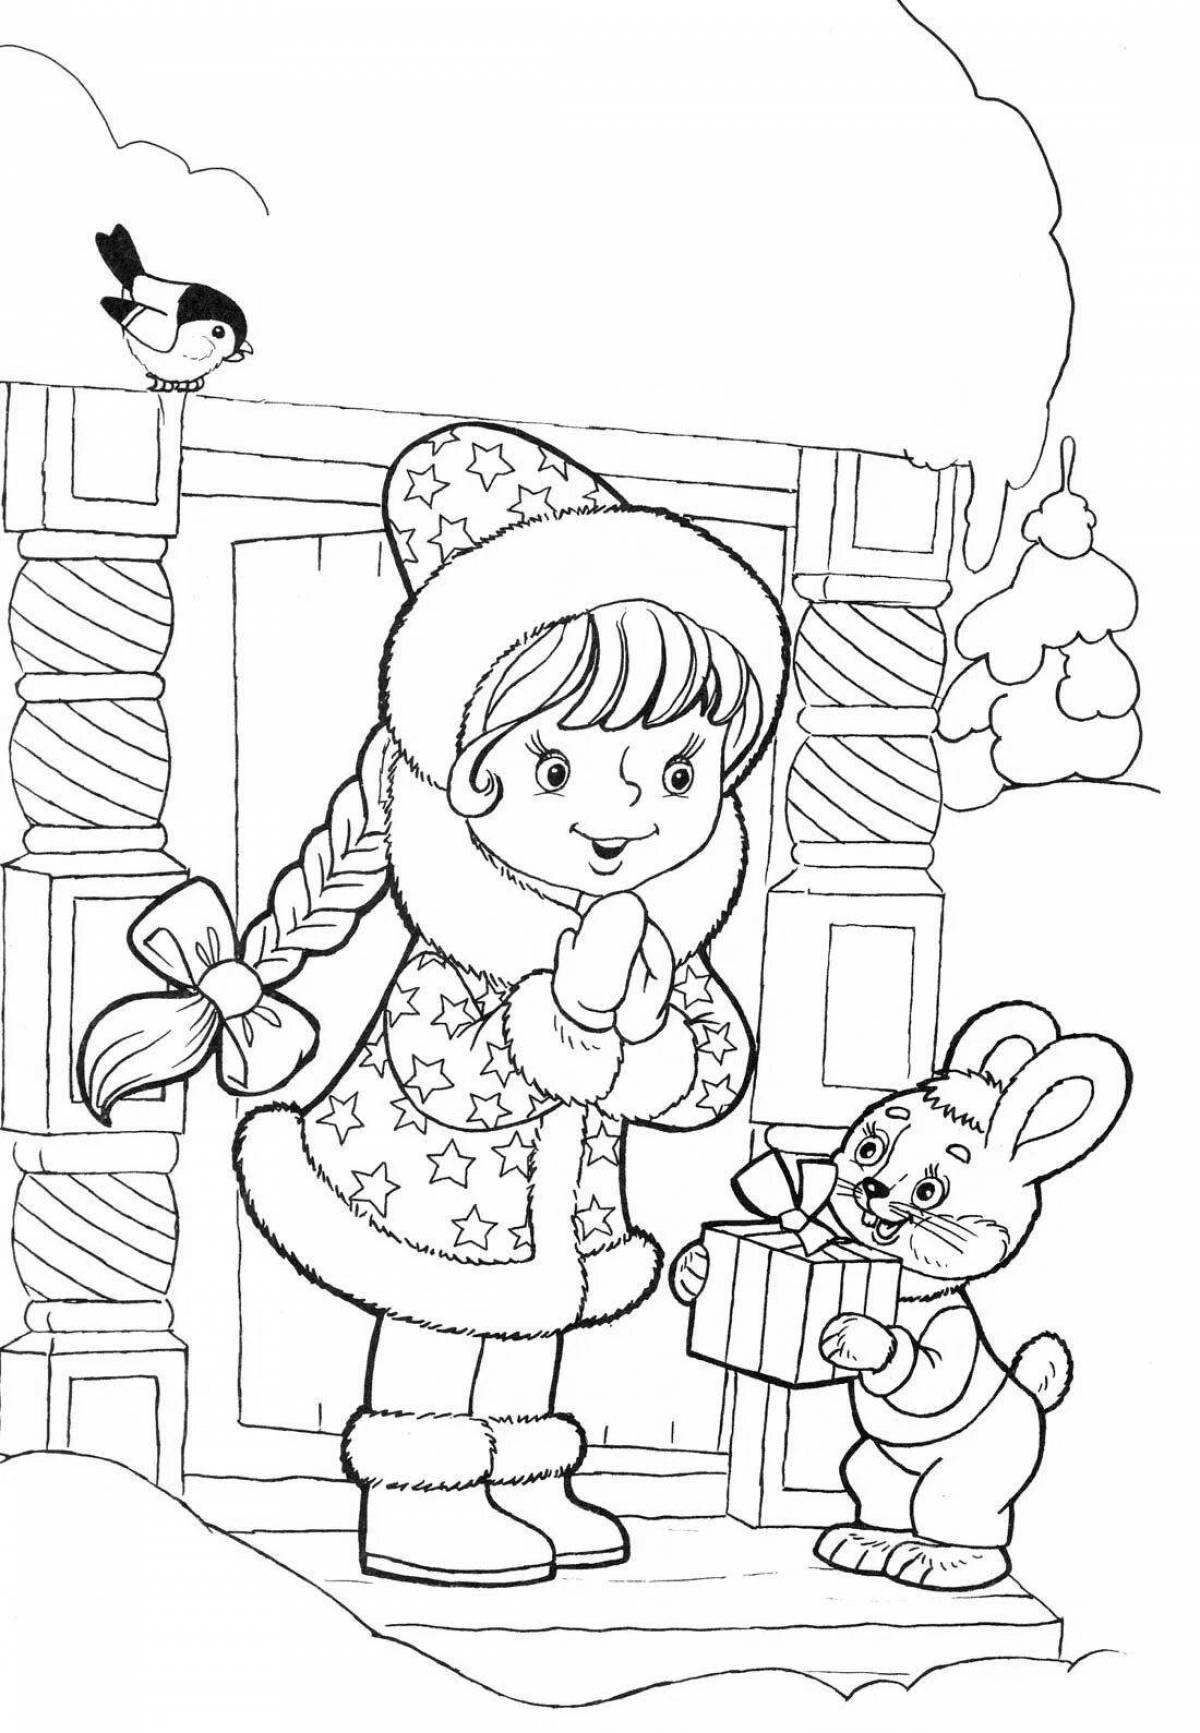 Colorful santa claus and bunny coloring book